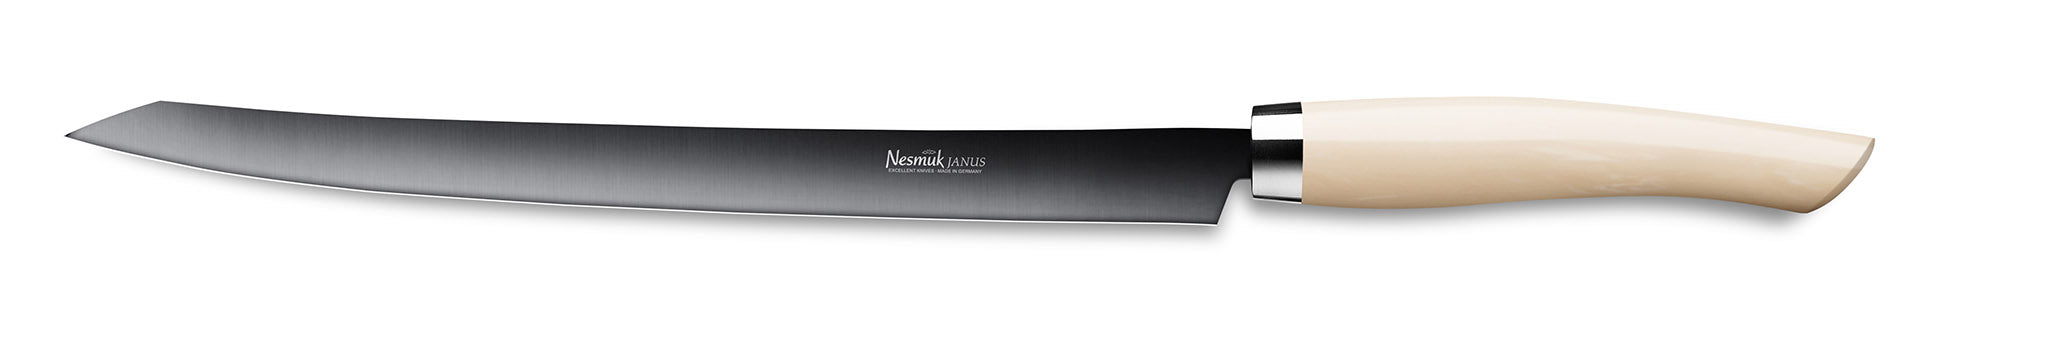 Nesmuk Tranchiermesser Slicer Janus mit 160 mm langer Klinge und Griff aus Hightech Kunststoff Juma Ivory